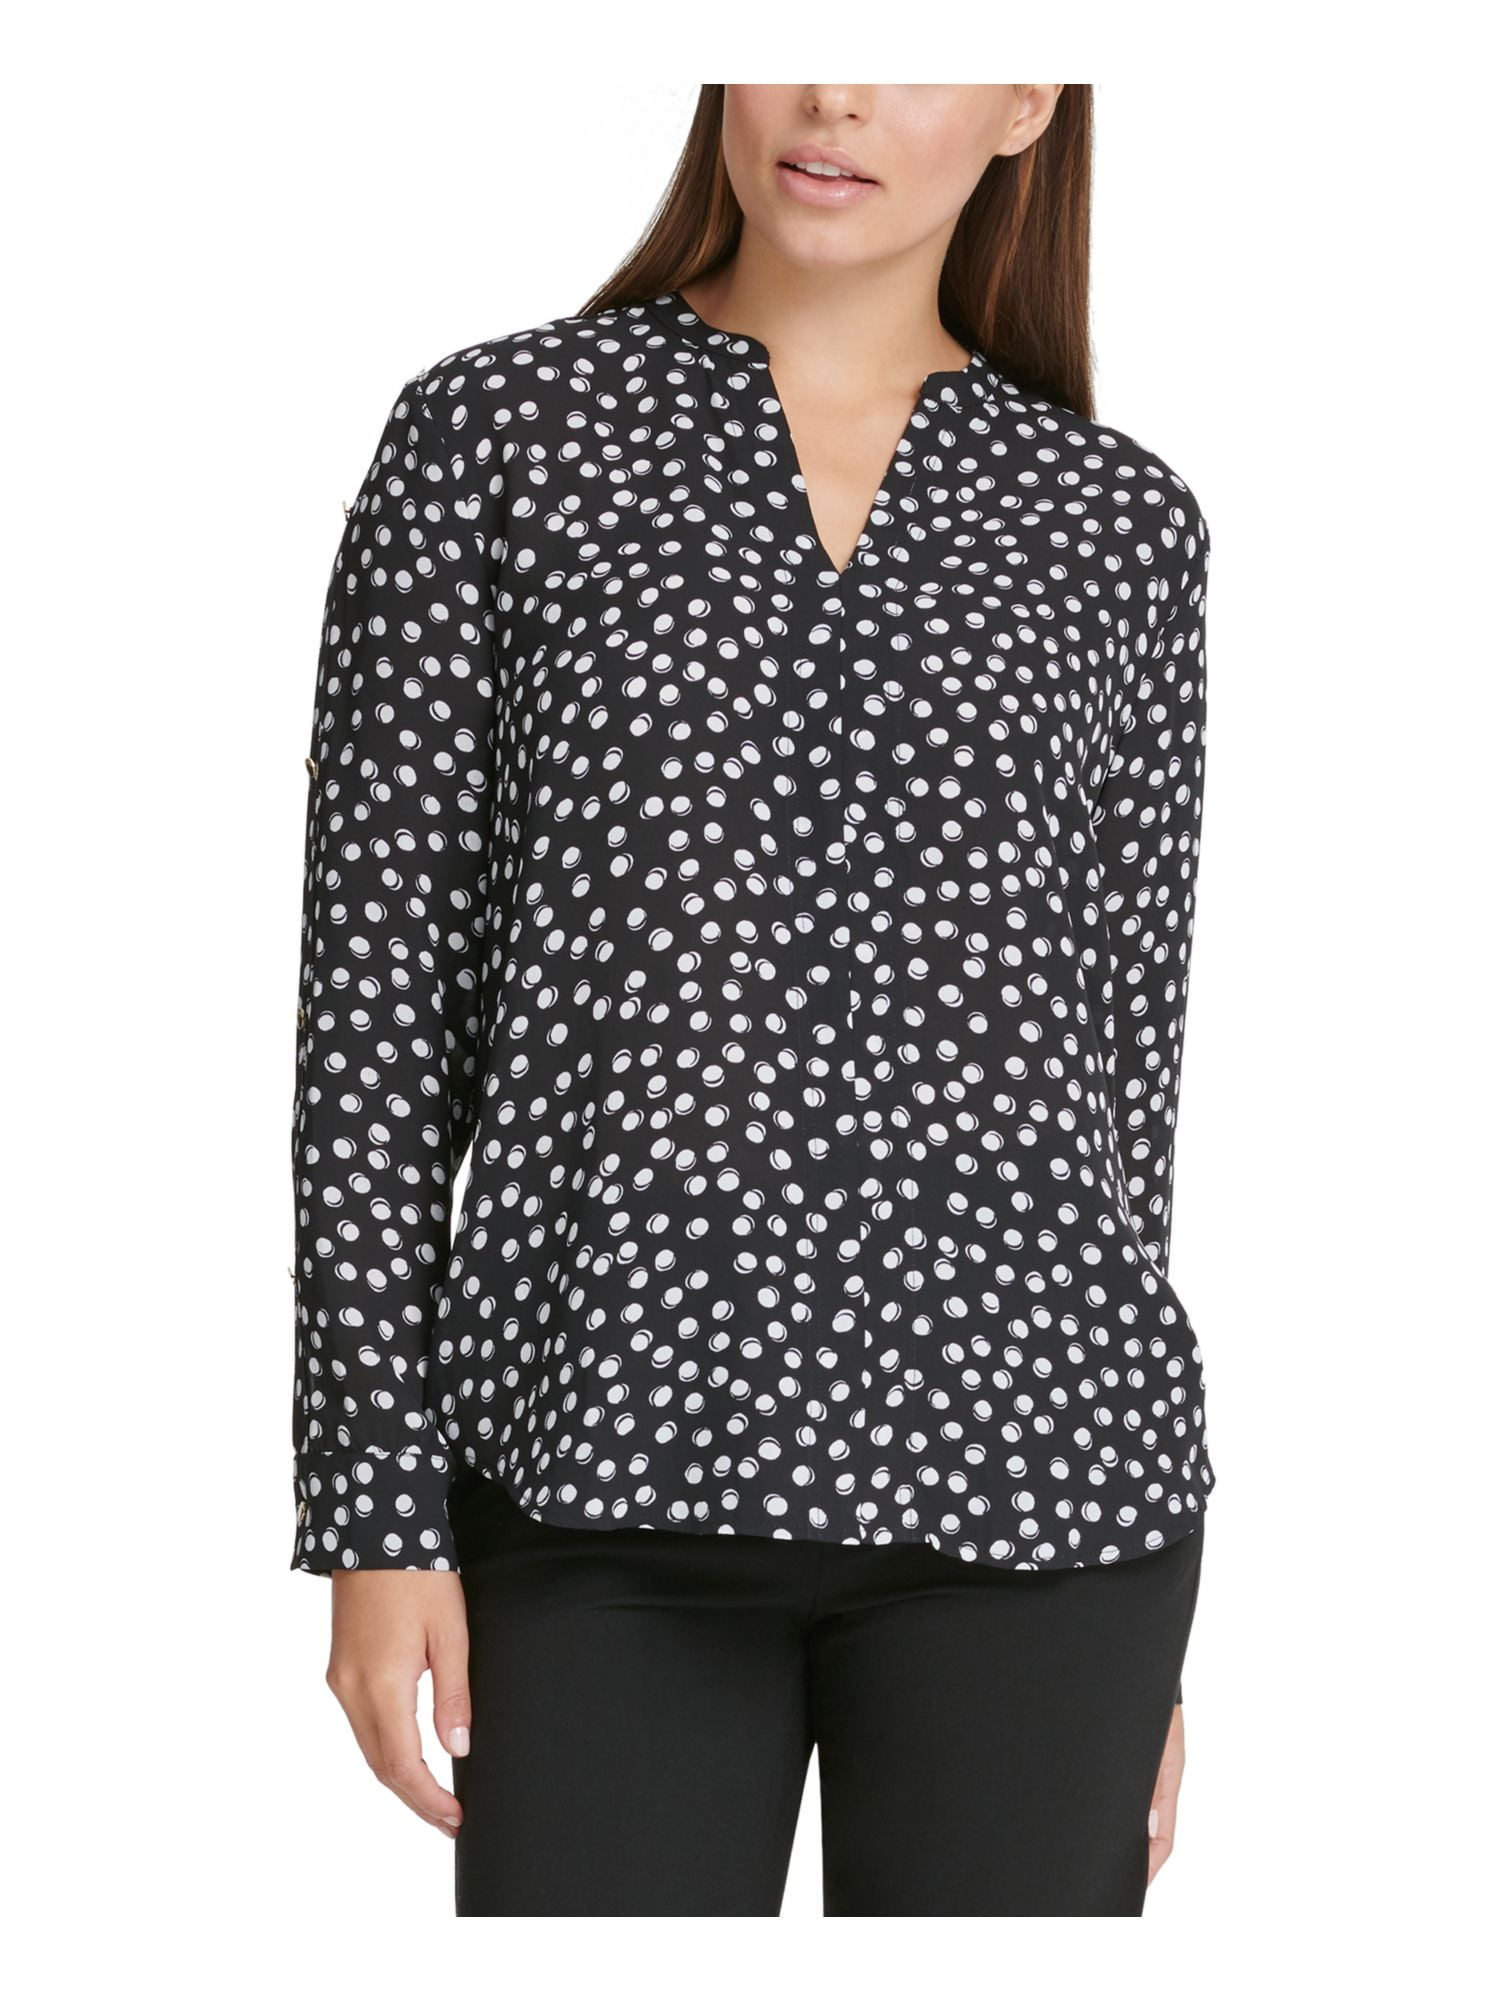 DKNY Womens Black Polka Dot Long Sleeve V Neck Top Size: M - Walmart.com